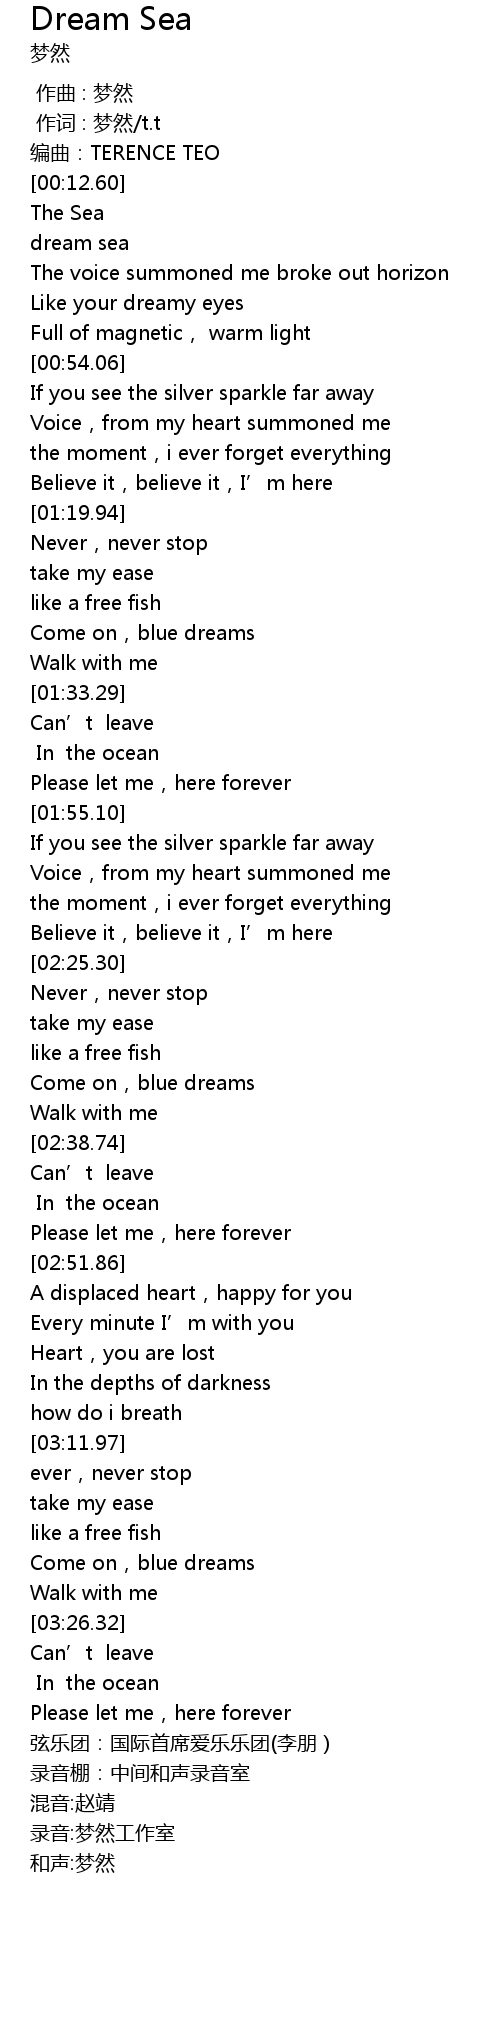 Dream Sea Lyrics Follow Lyrics